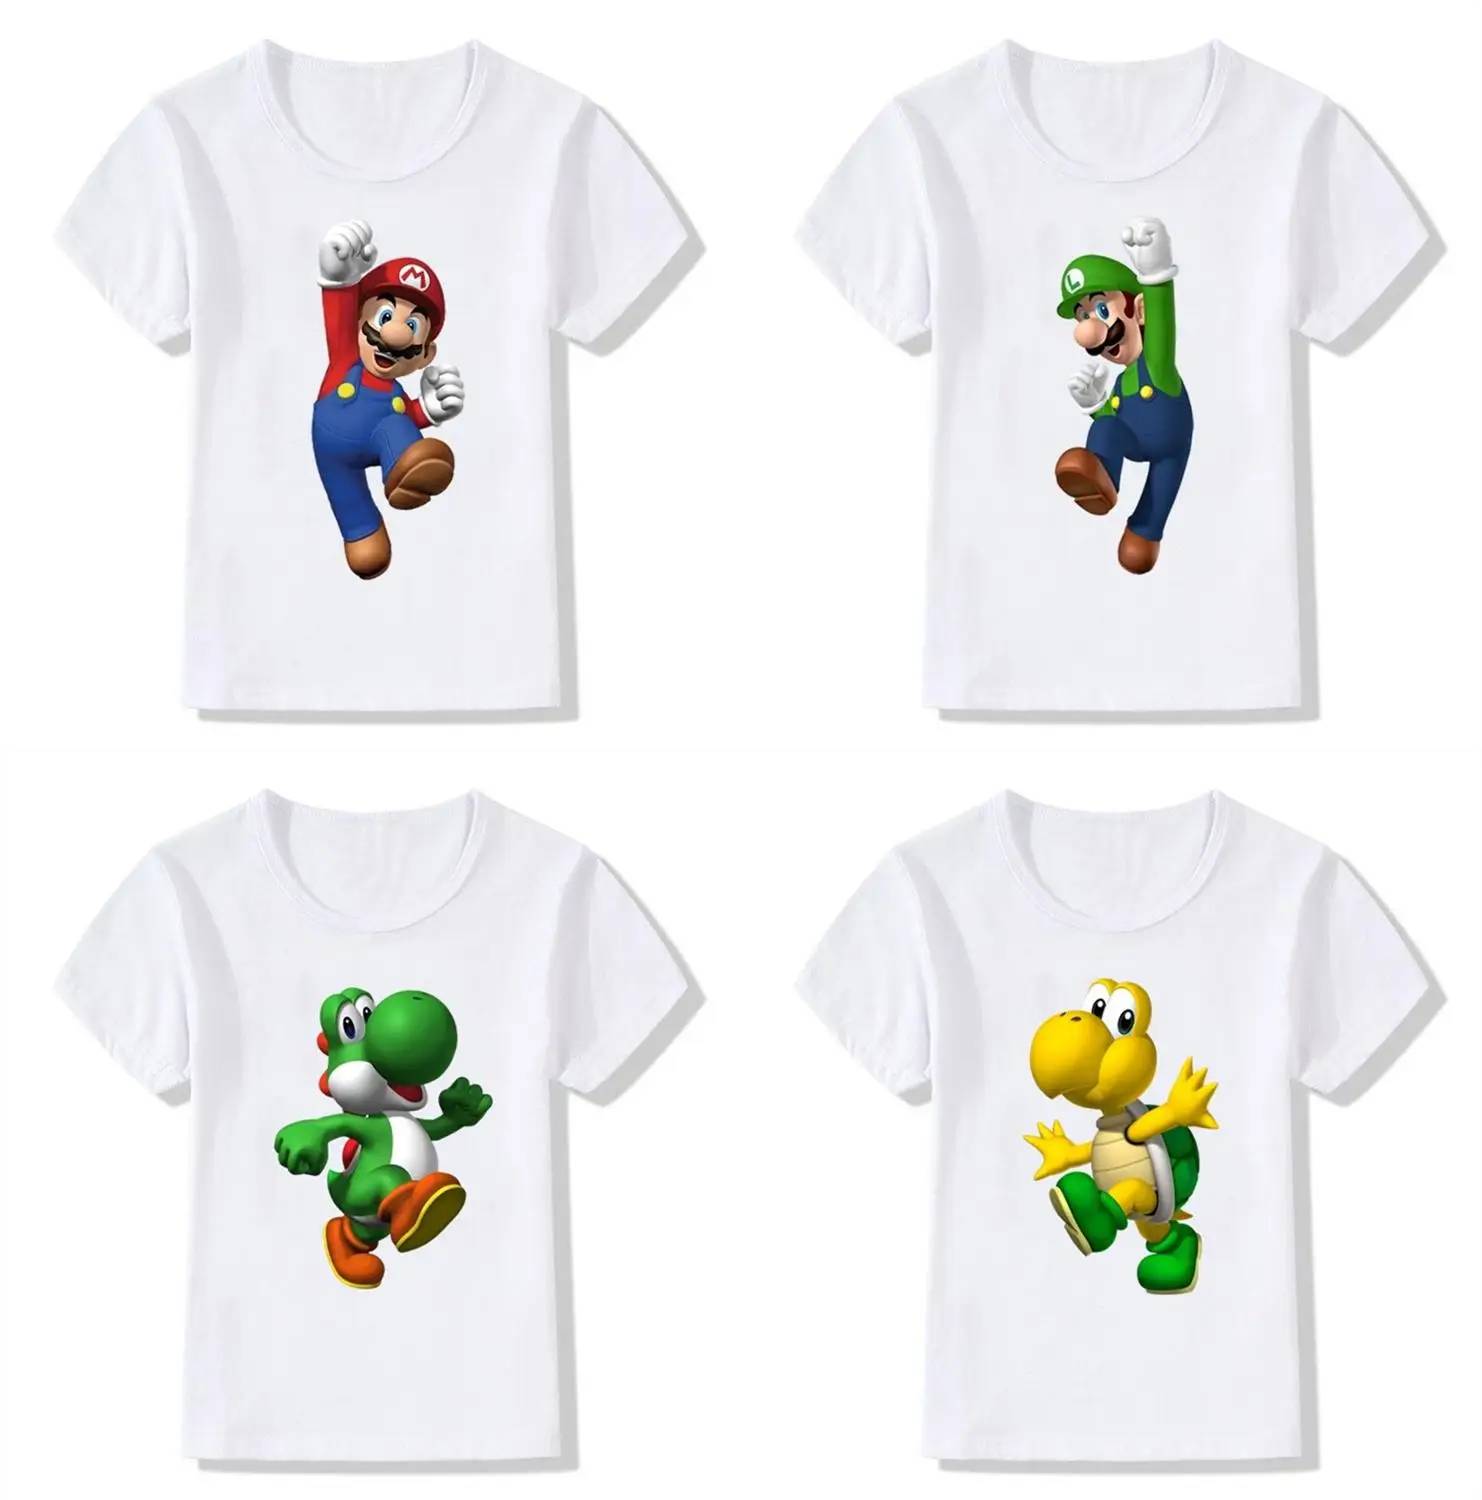 cuello redondo manga corta unisex Aatensou Camiseta de Super Mario Bros para niños impresión 3D